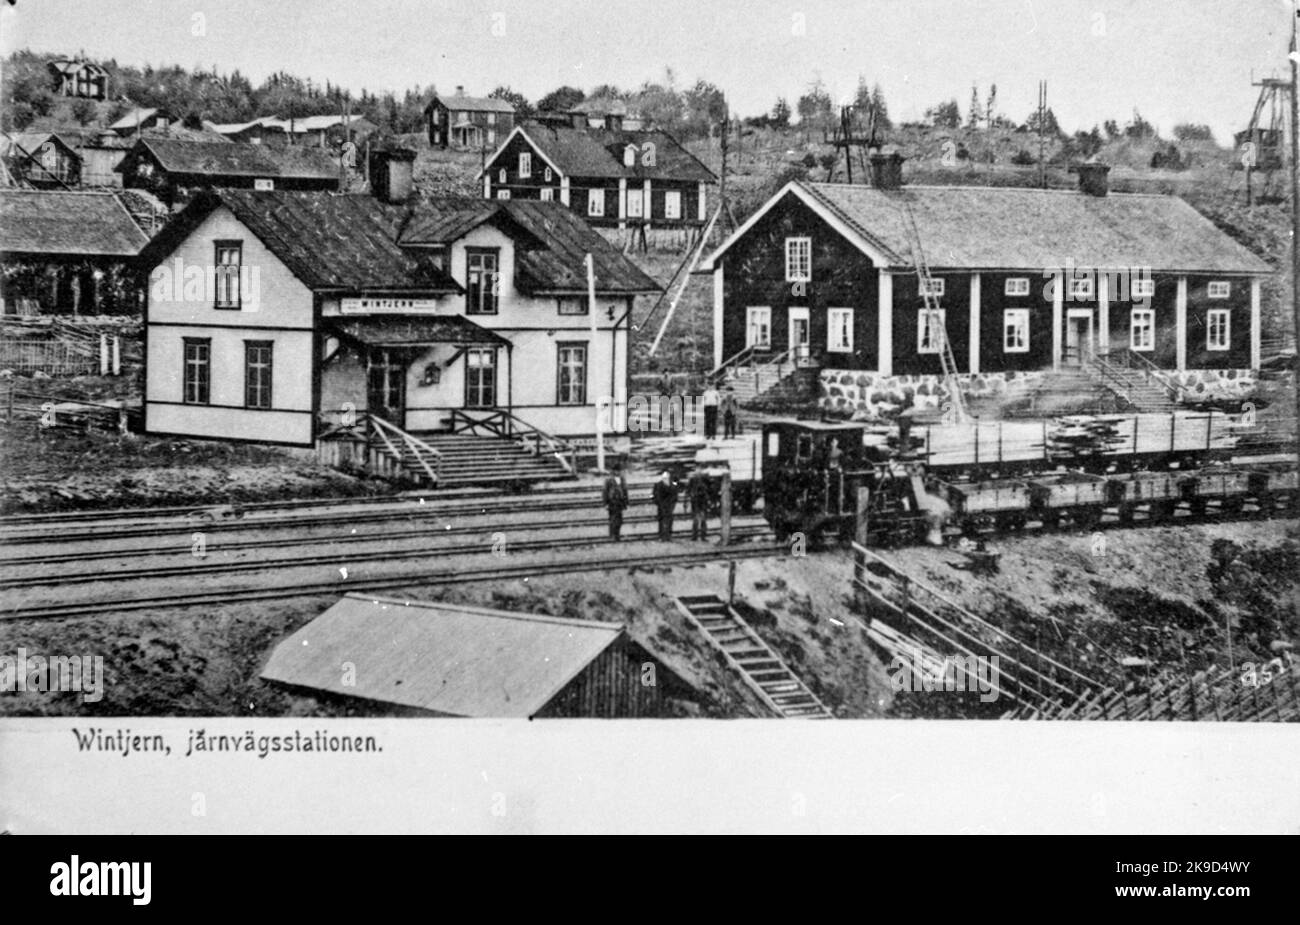 Verkehrsgebiet wurde 1876 erbaut. Eineinhalb Stockwerke hohe Bahnhofshäuser in Holz. Ehemalige Wint Iron Nedre.åd - Vintjärns Railway Lok 2 'Korsån' mit Waggons Stockfoto